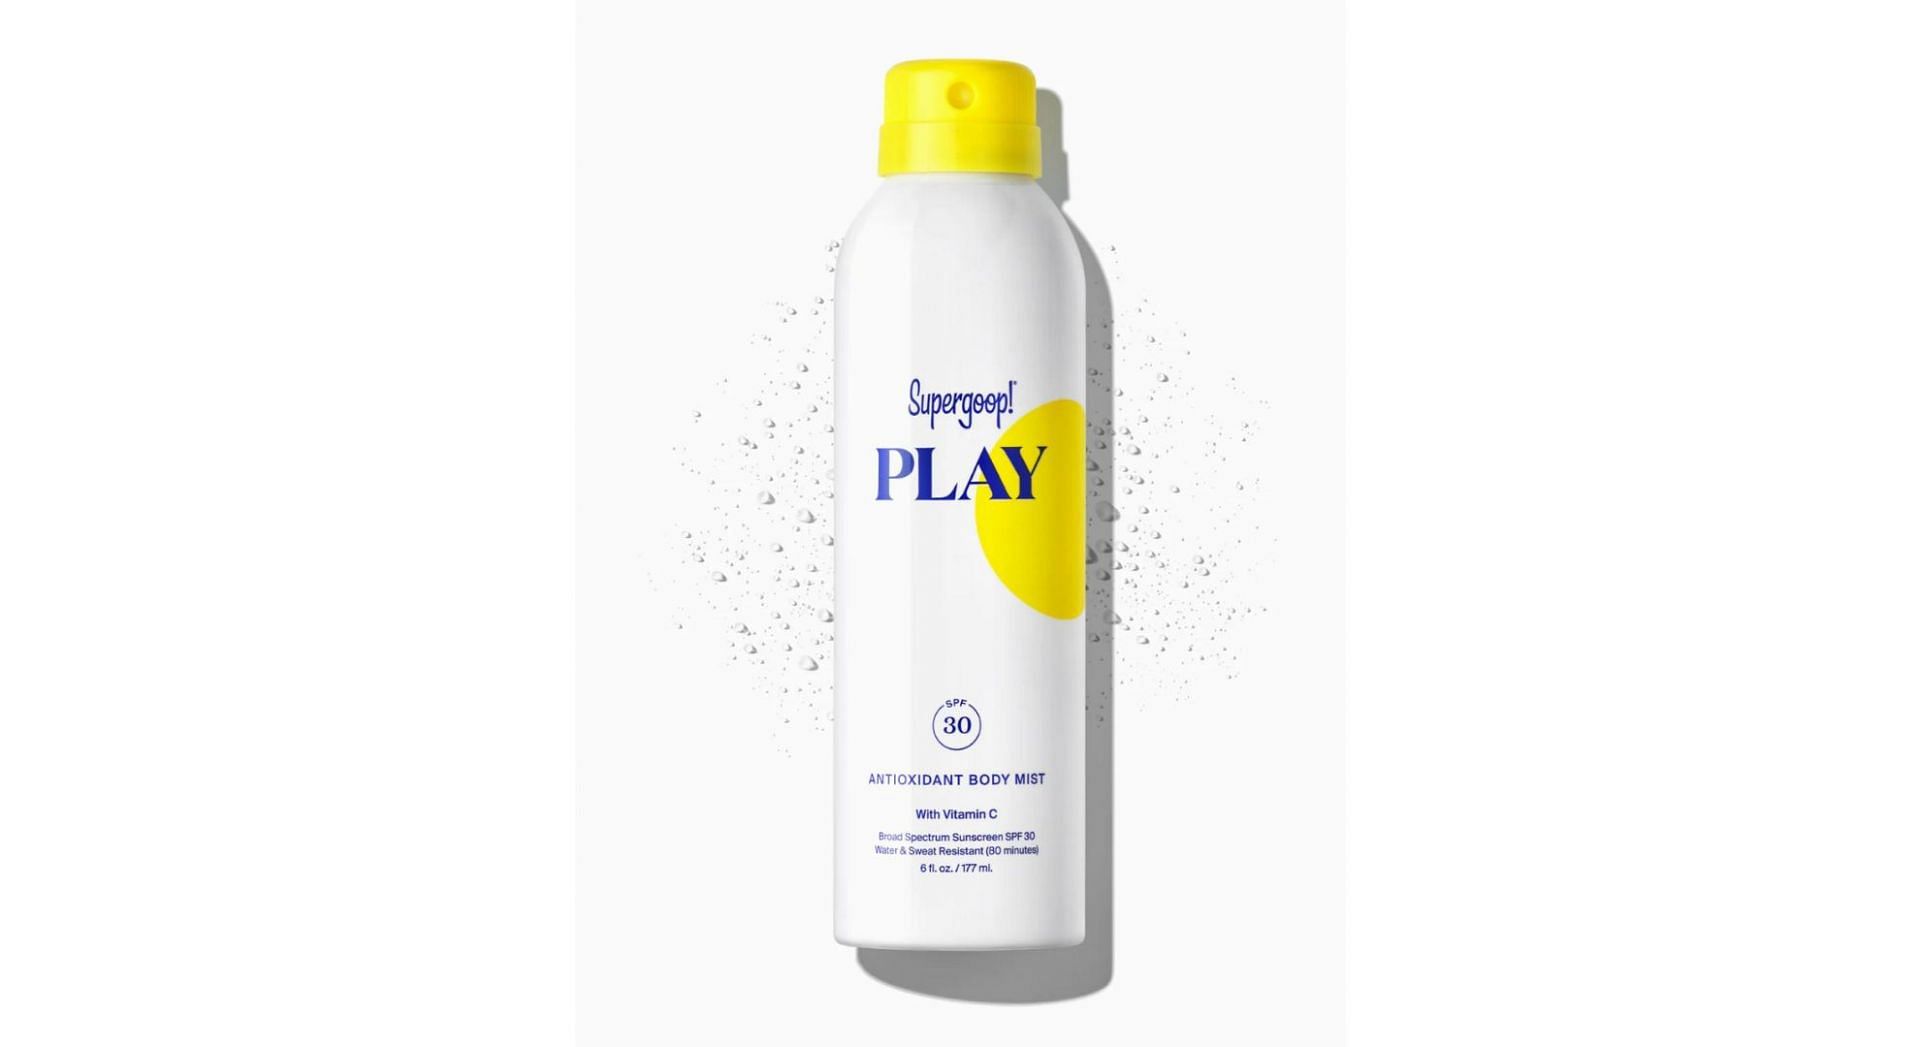 PLAY Antioxidant Body Mist SPF 30 with Vitamin C (Image via Supergoop)